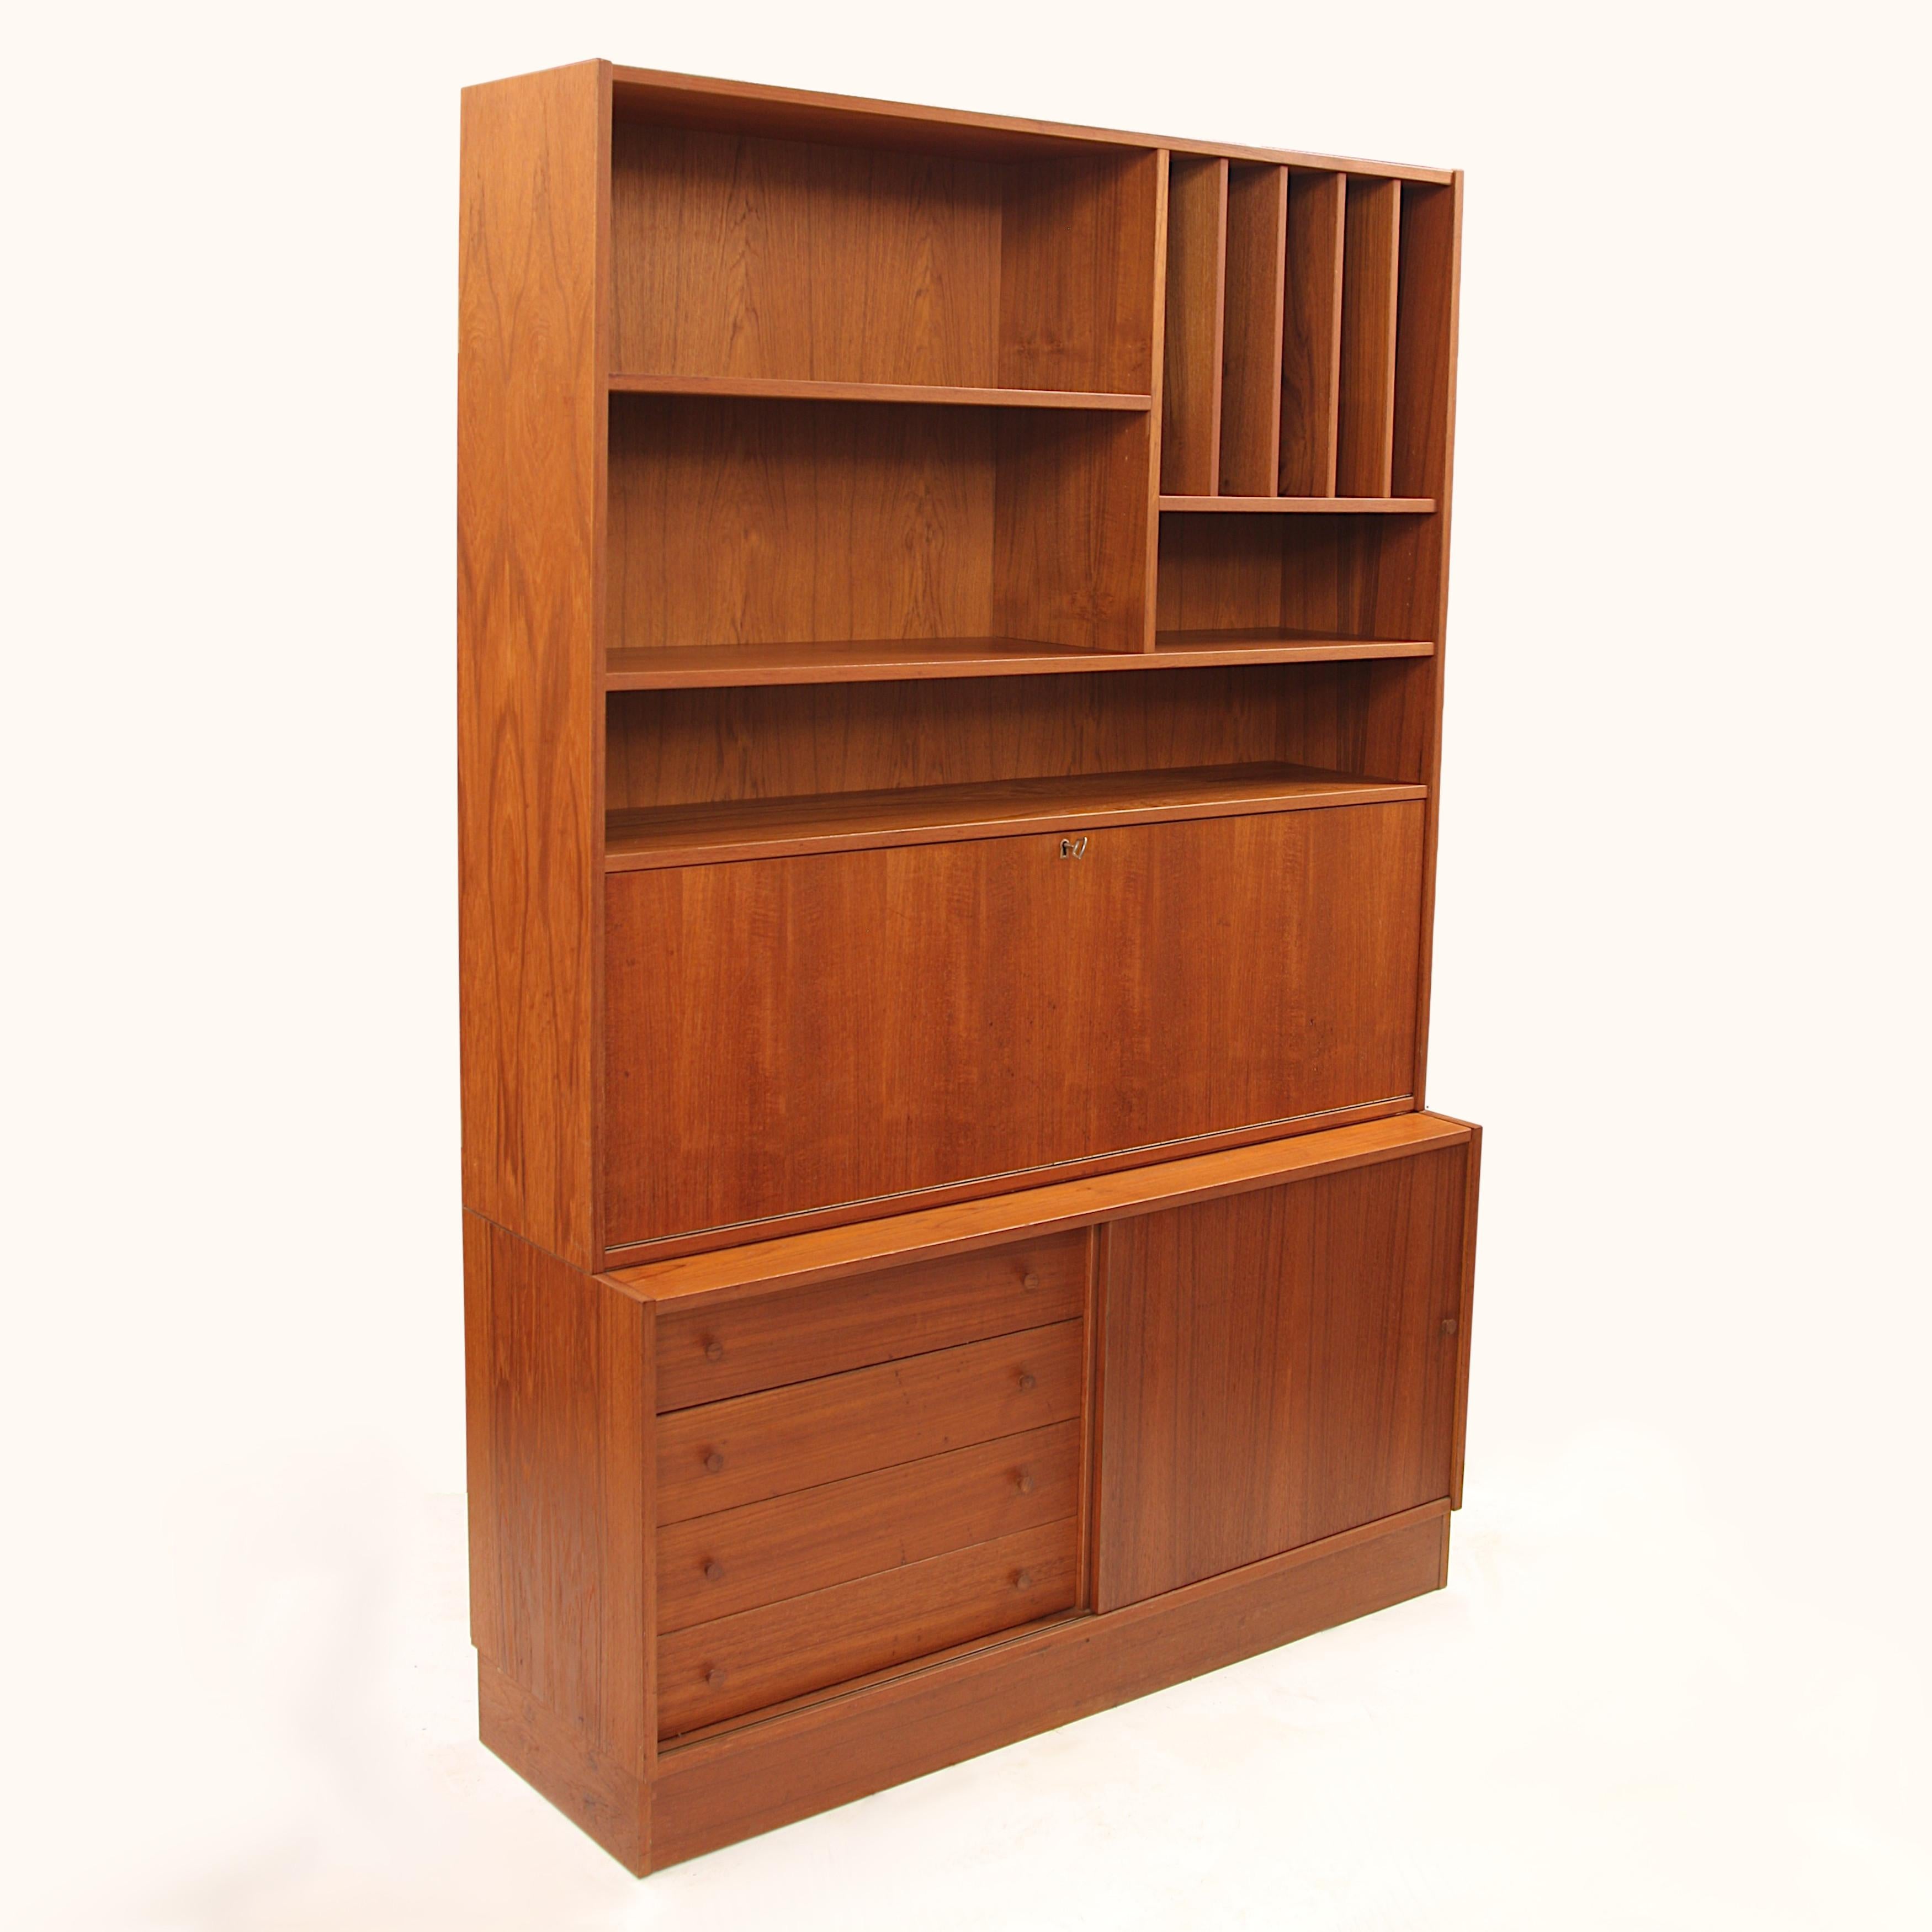 Vintage Danish Modern teak bookcase cabinet and secretary desk by Domino Mobler.

Cabinet Features:

Beautiful teak Veneer
Open Upper Shelves w/ 11.25